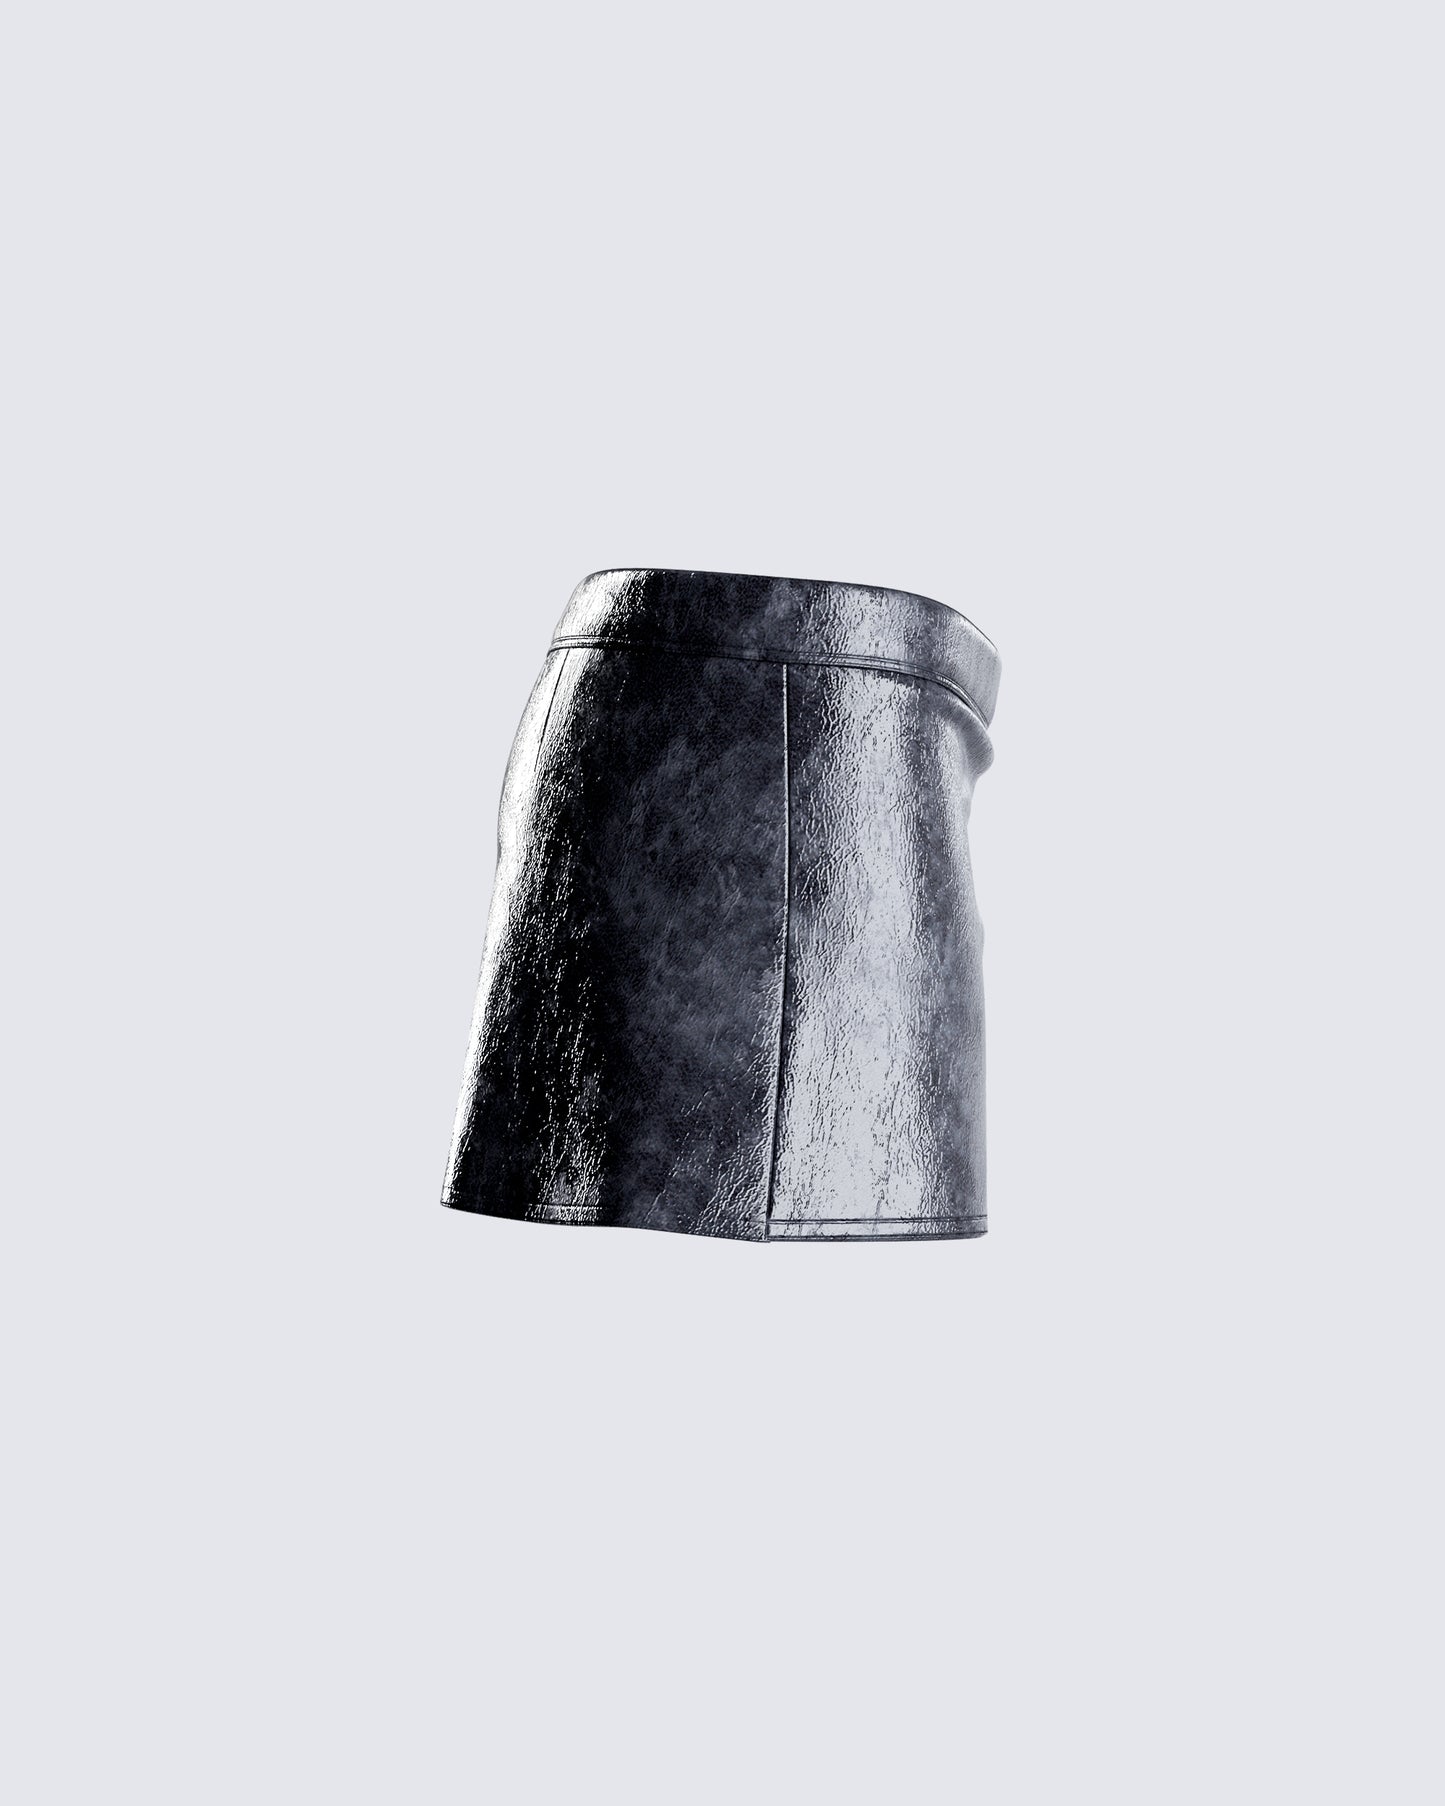 Fern Black Vegan Leather Mini Skirt